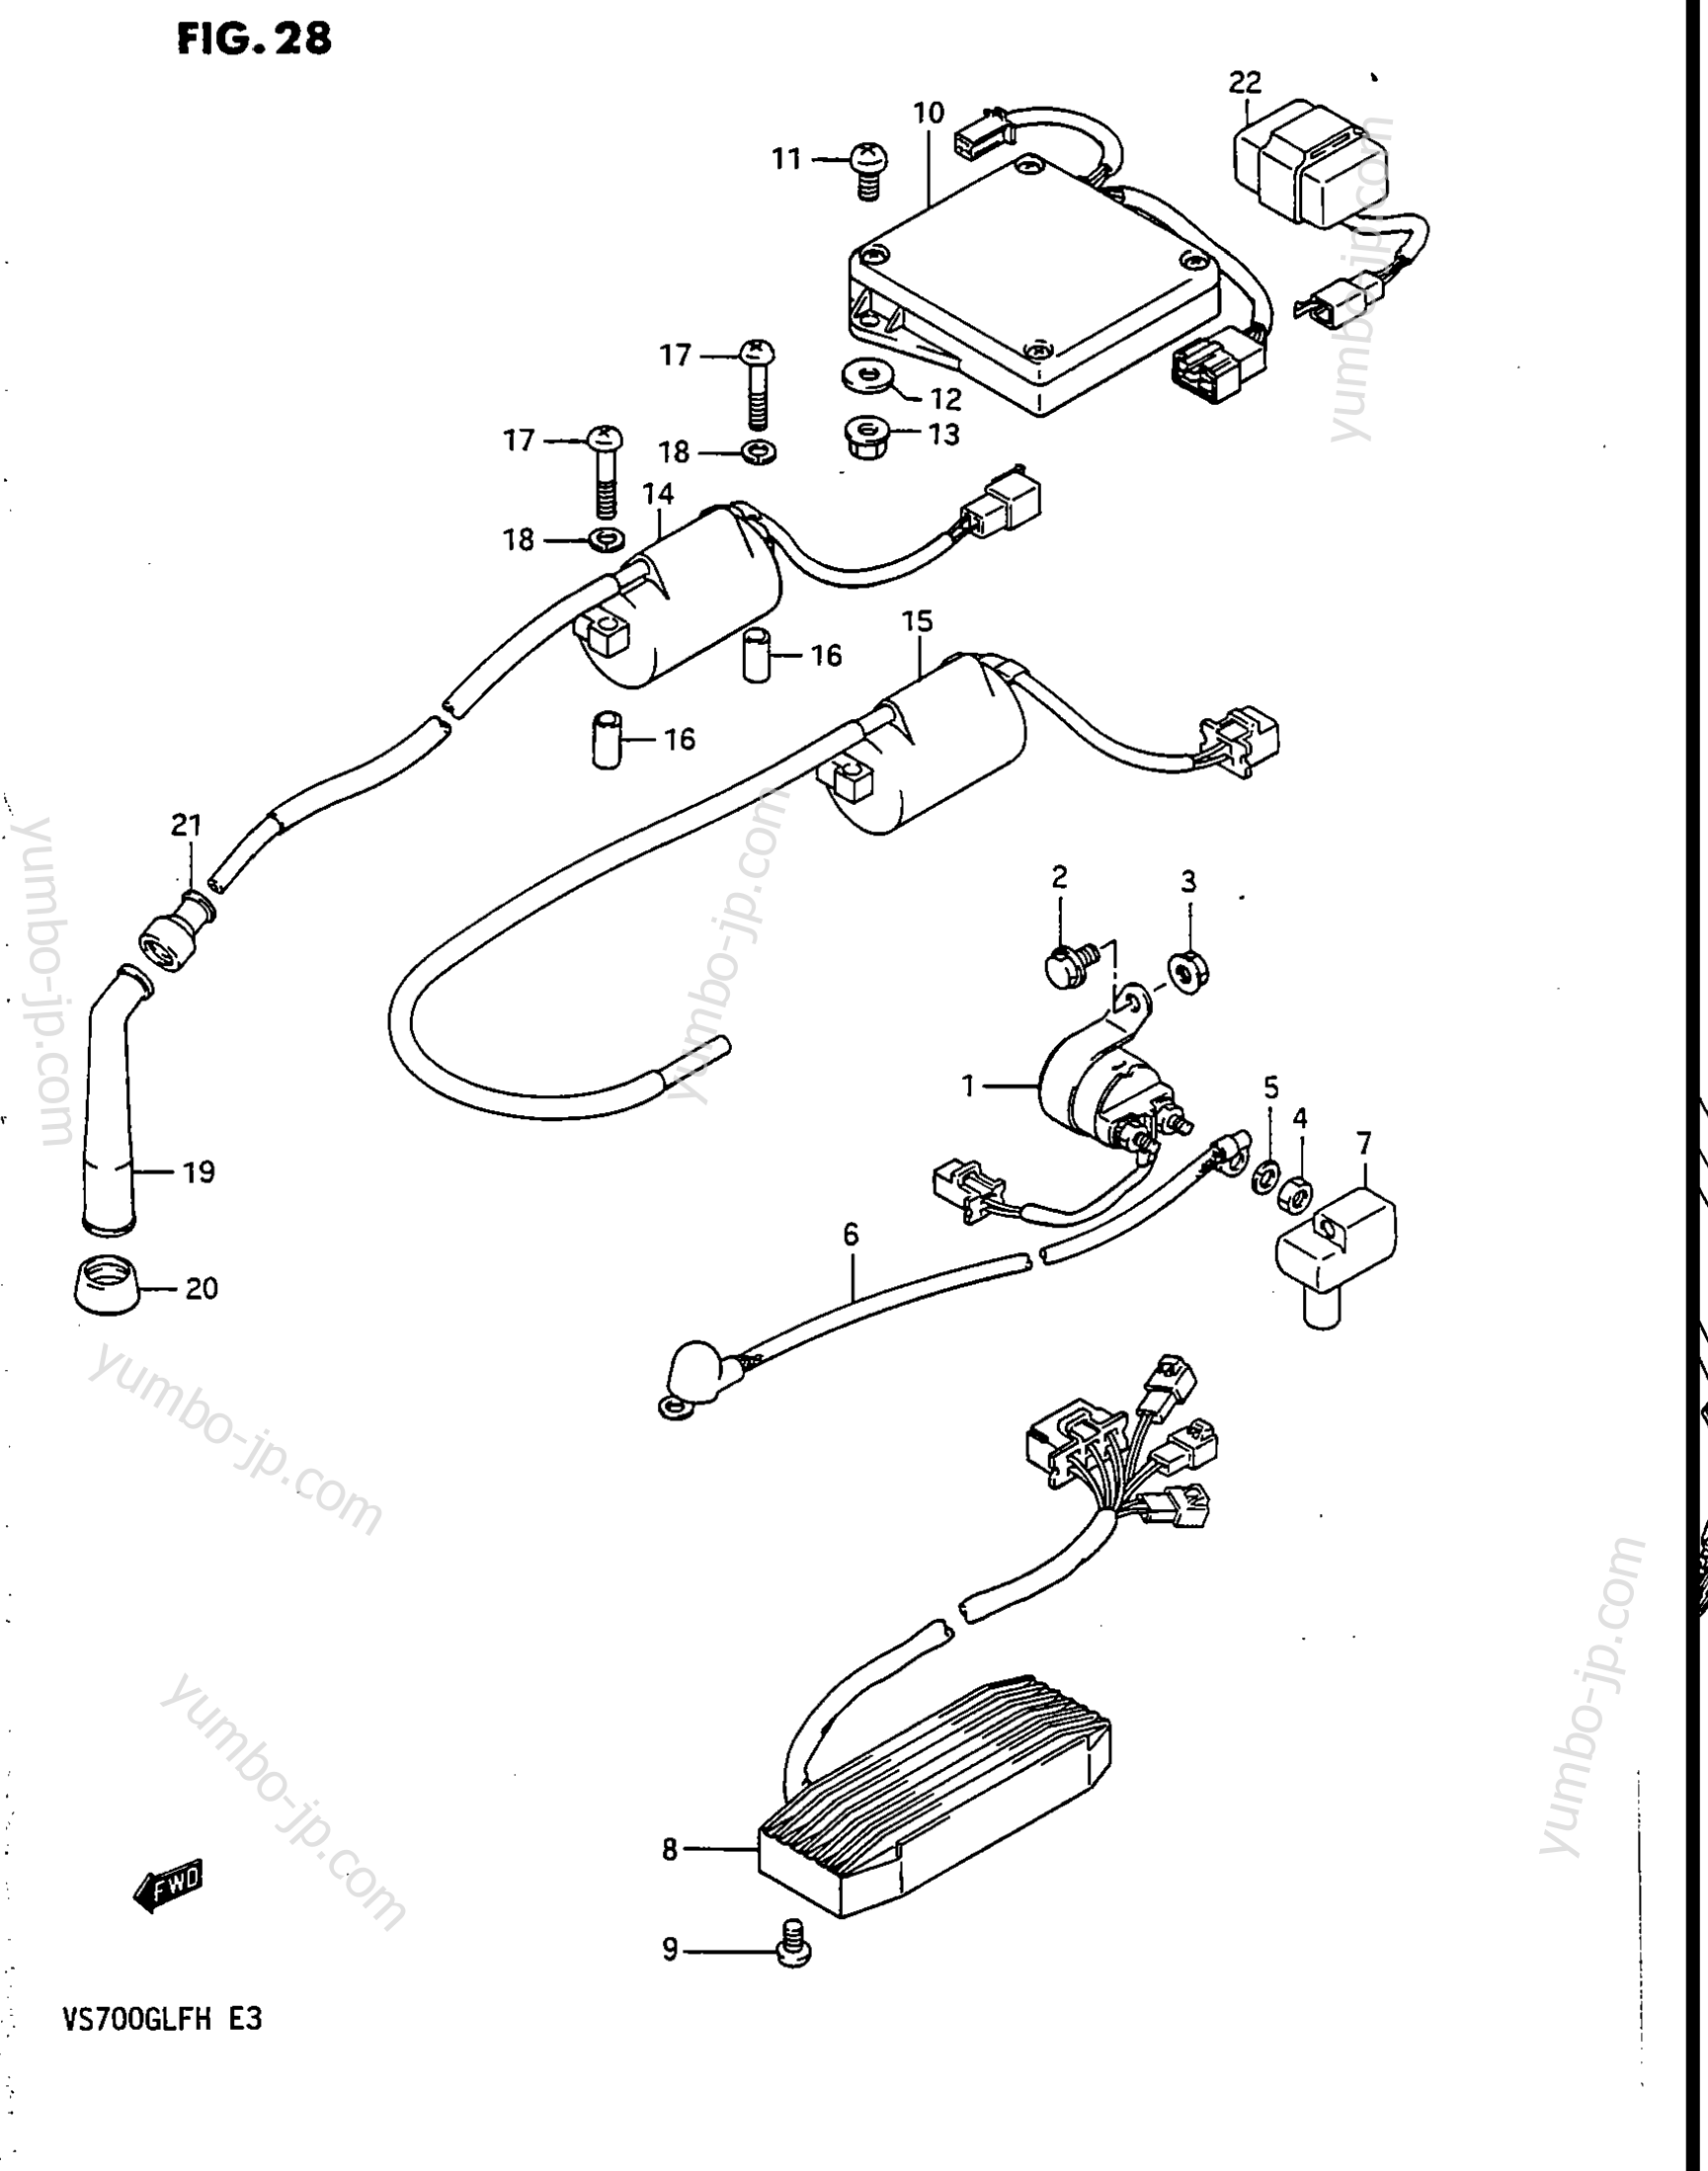 Electrical for motorcycles SUZUKI Intruder (VS700GLEF) 1986 year